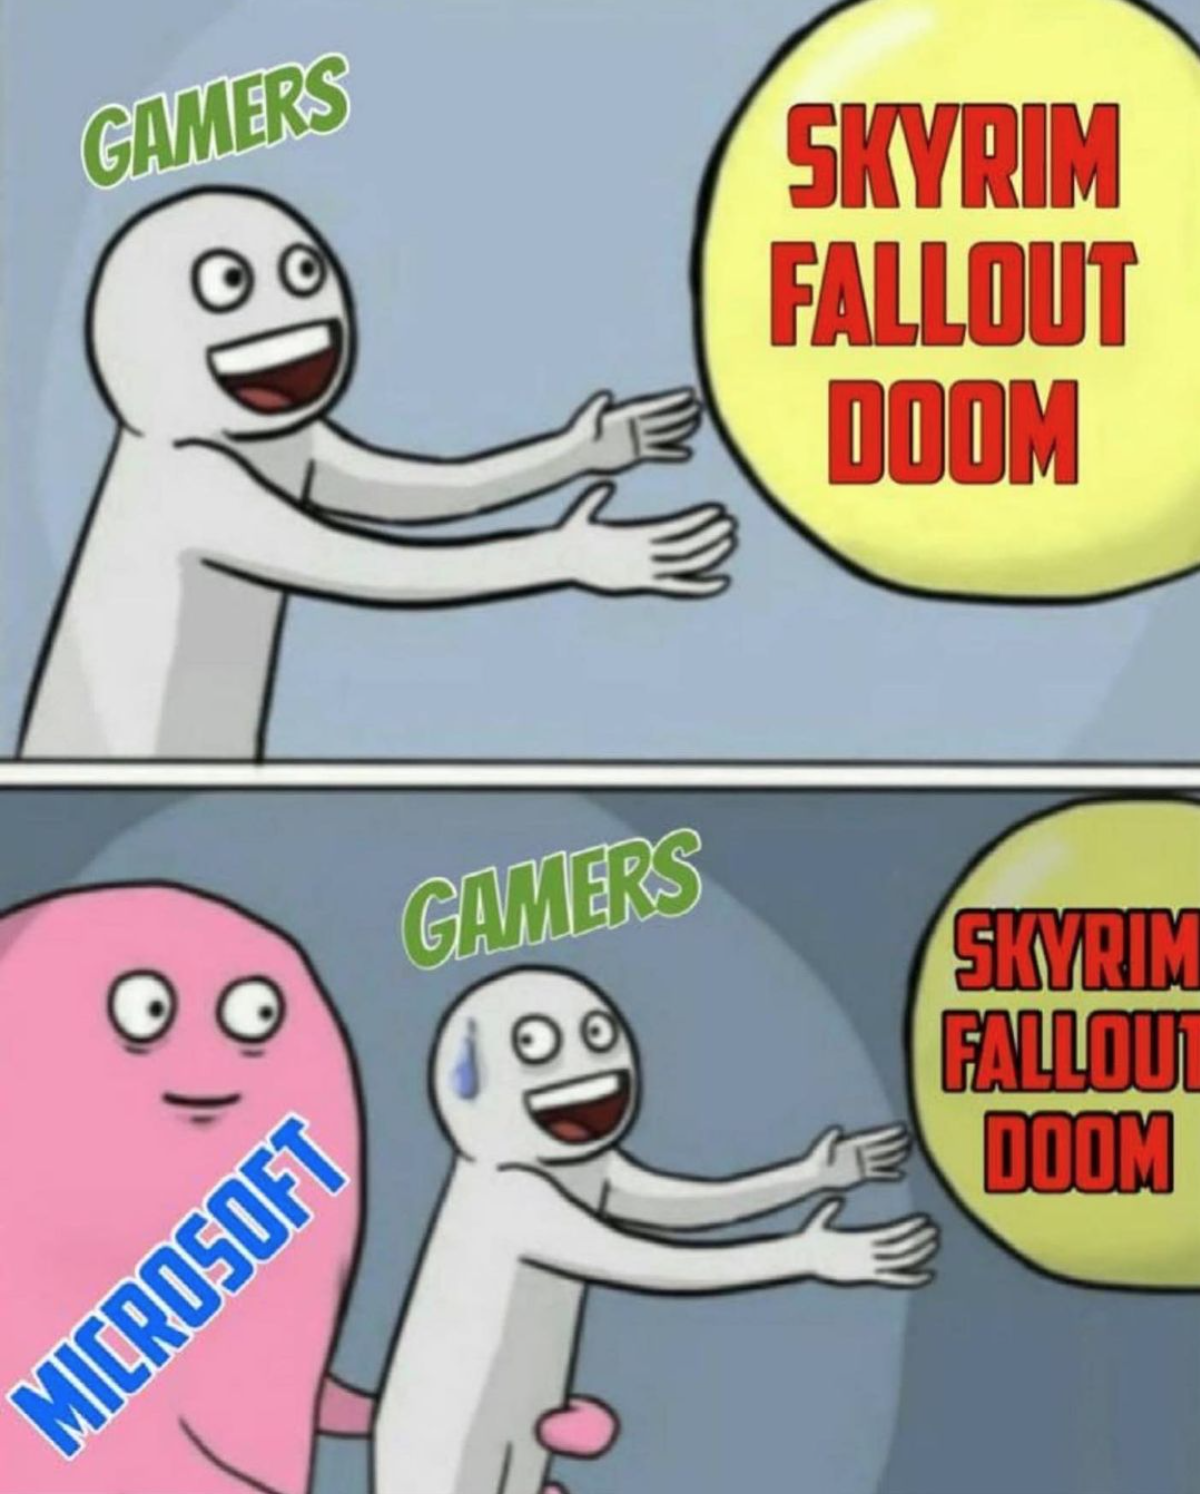 funny gaming memes - life on hard mode meme - Gamers Skyrim Fallout Doom Gamers Skyrim Fallout Doom Microsoft